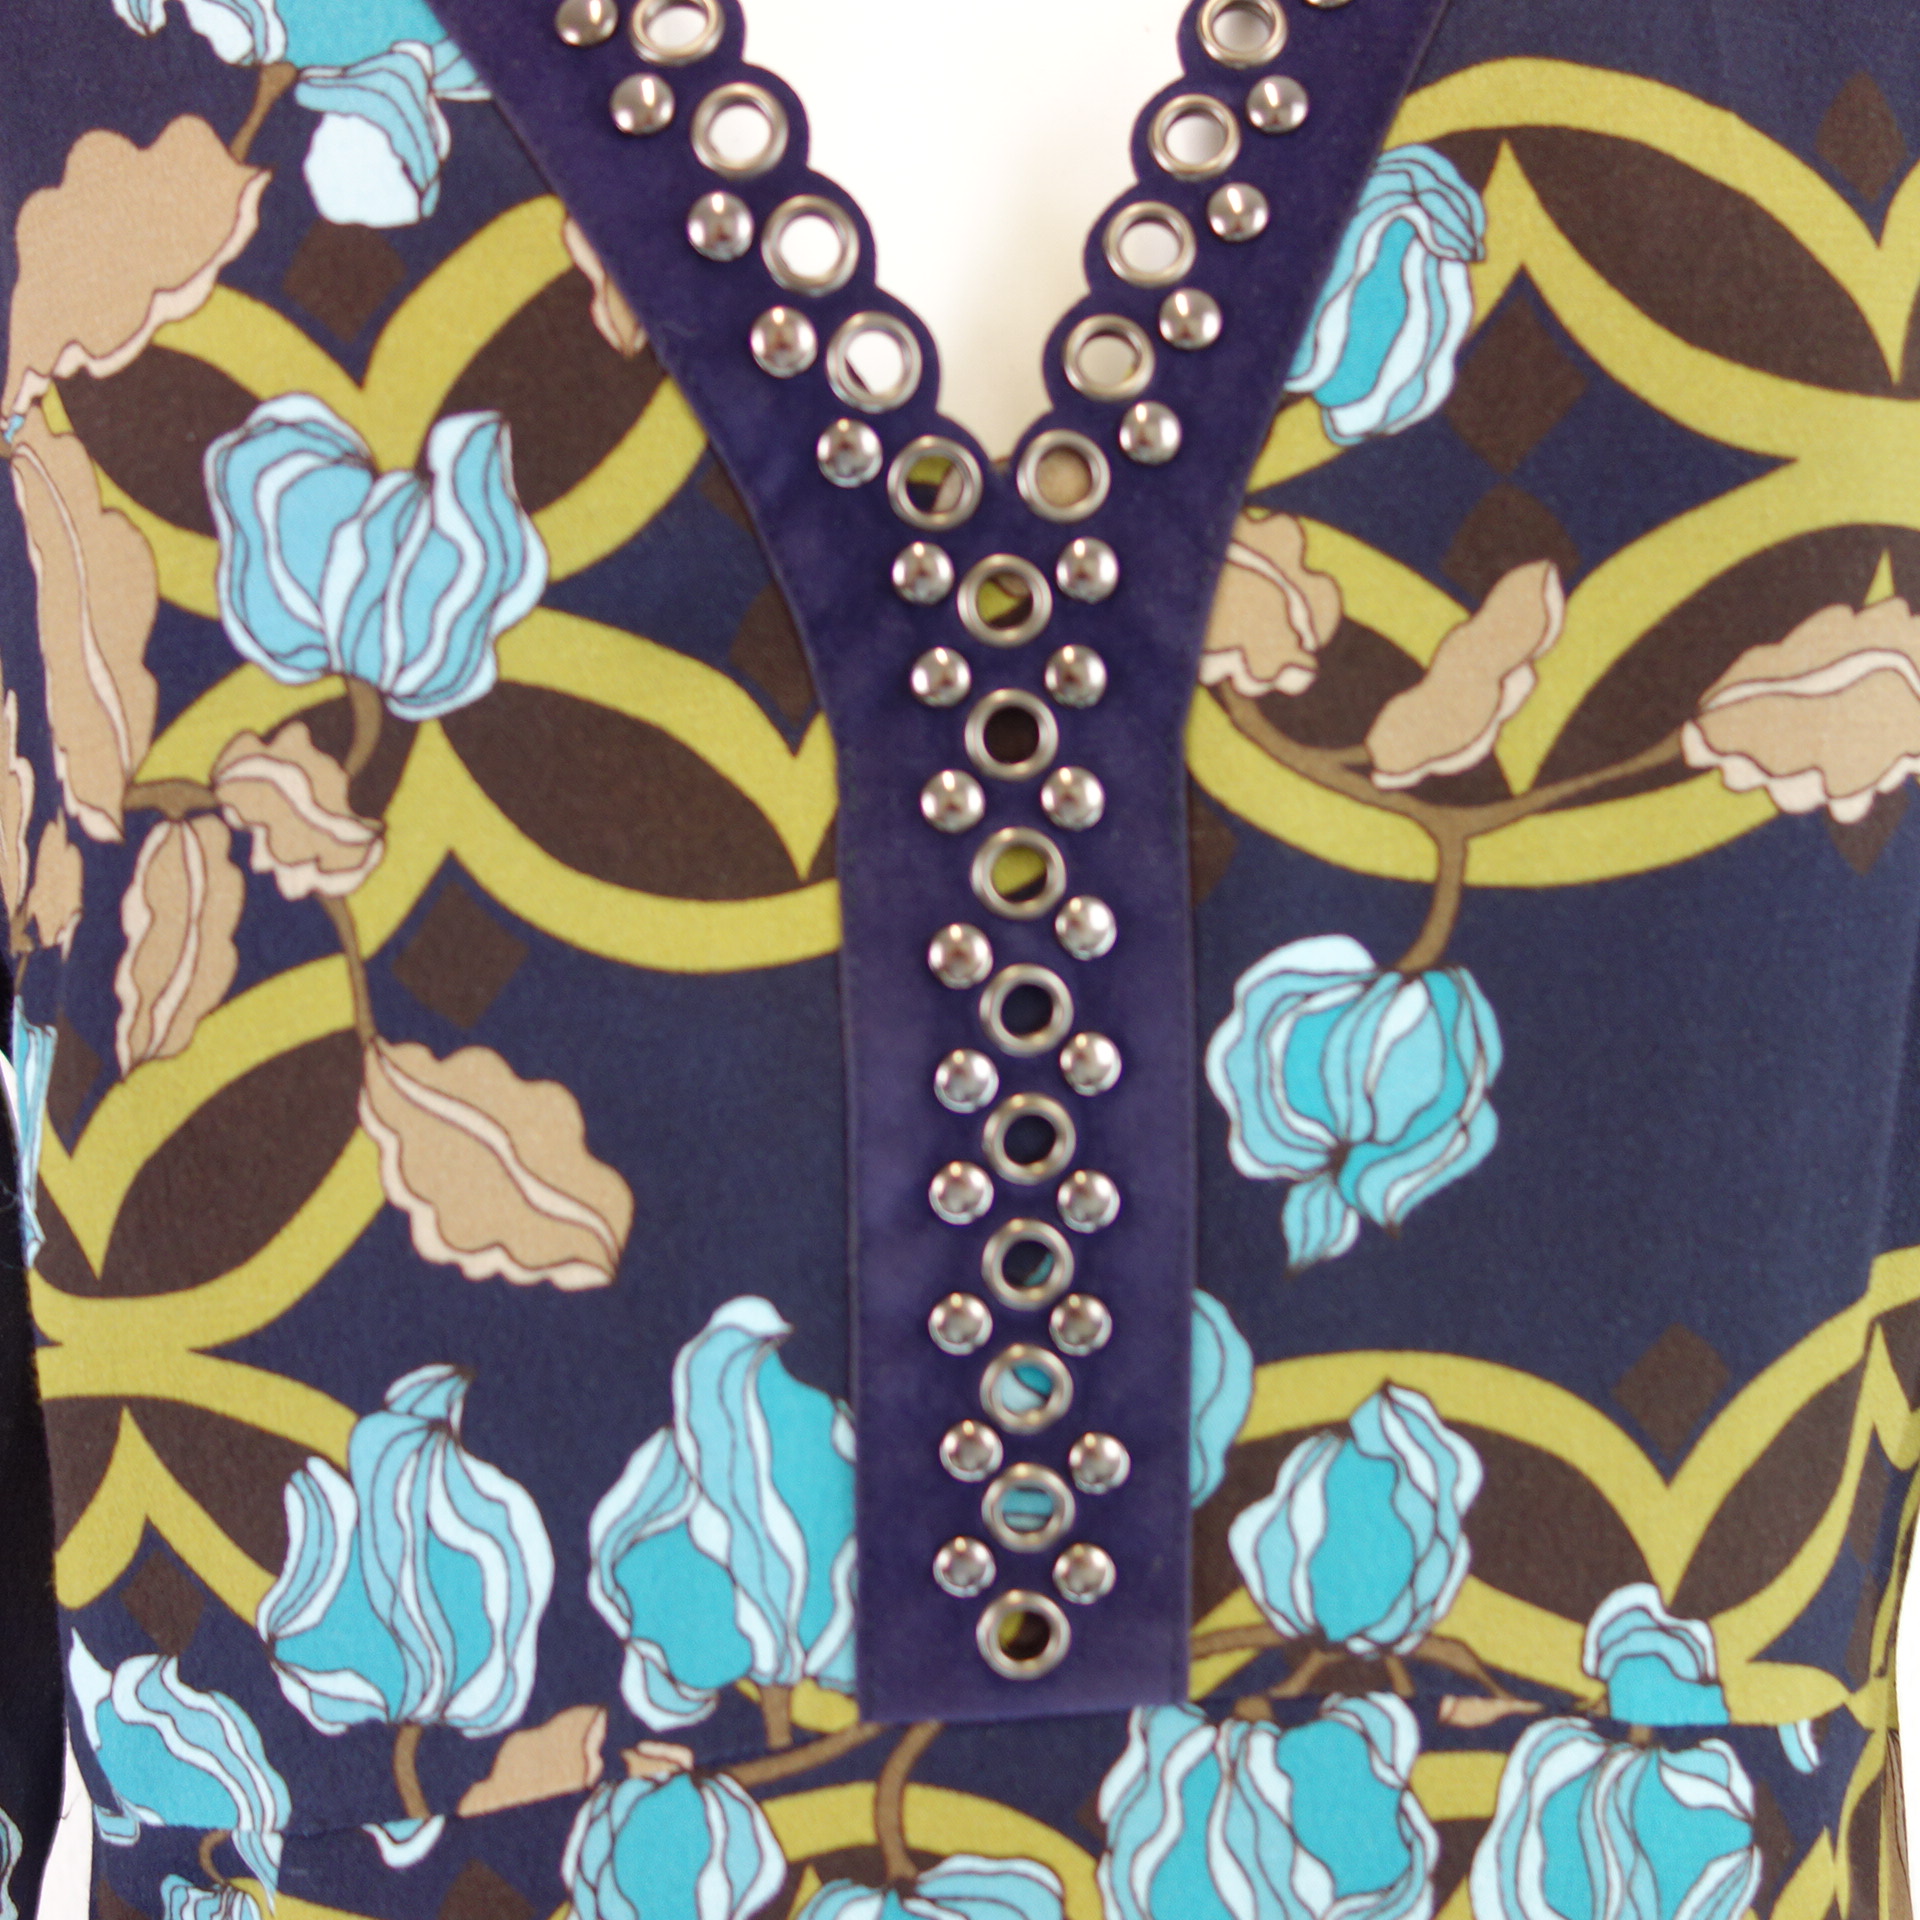 RIANI Damen Midi Kleid Etuikleid Midikleid Blumenprint Schwarz Oliv Petrol Viskose Größe 38 M